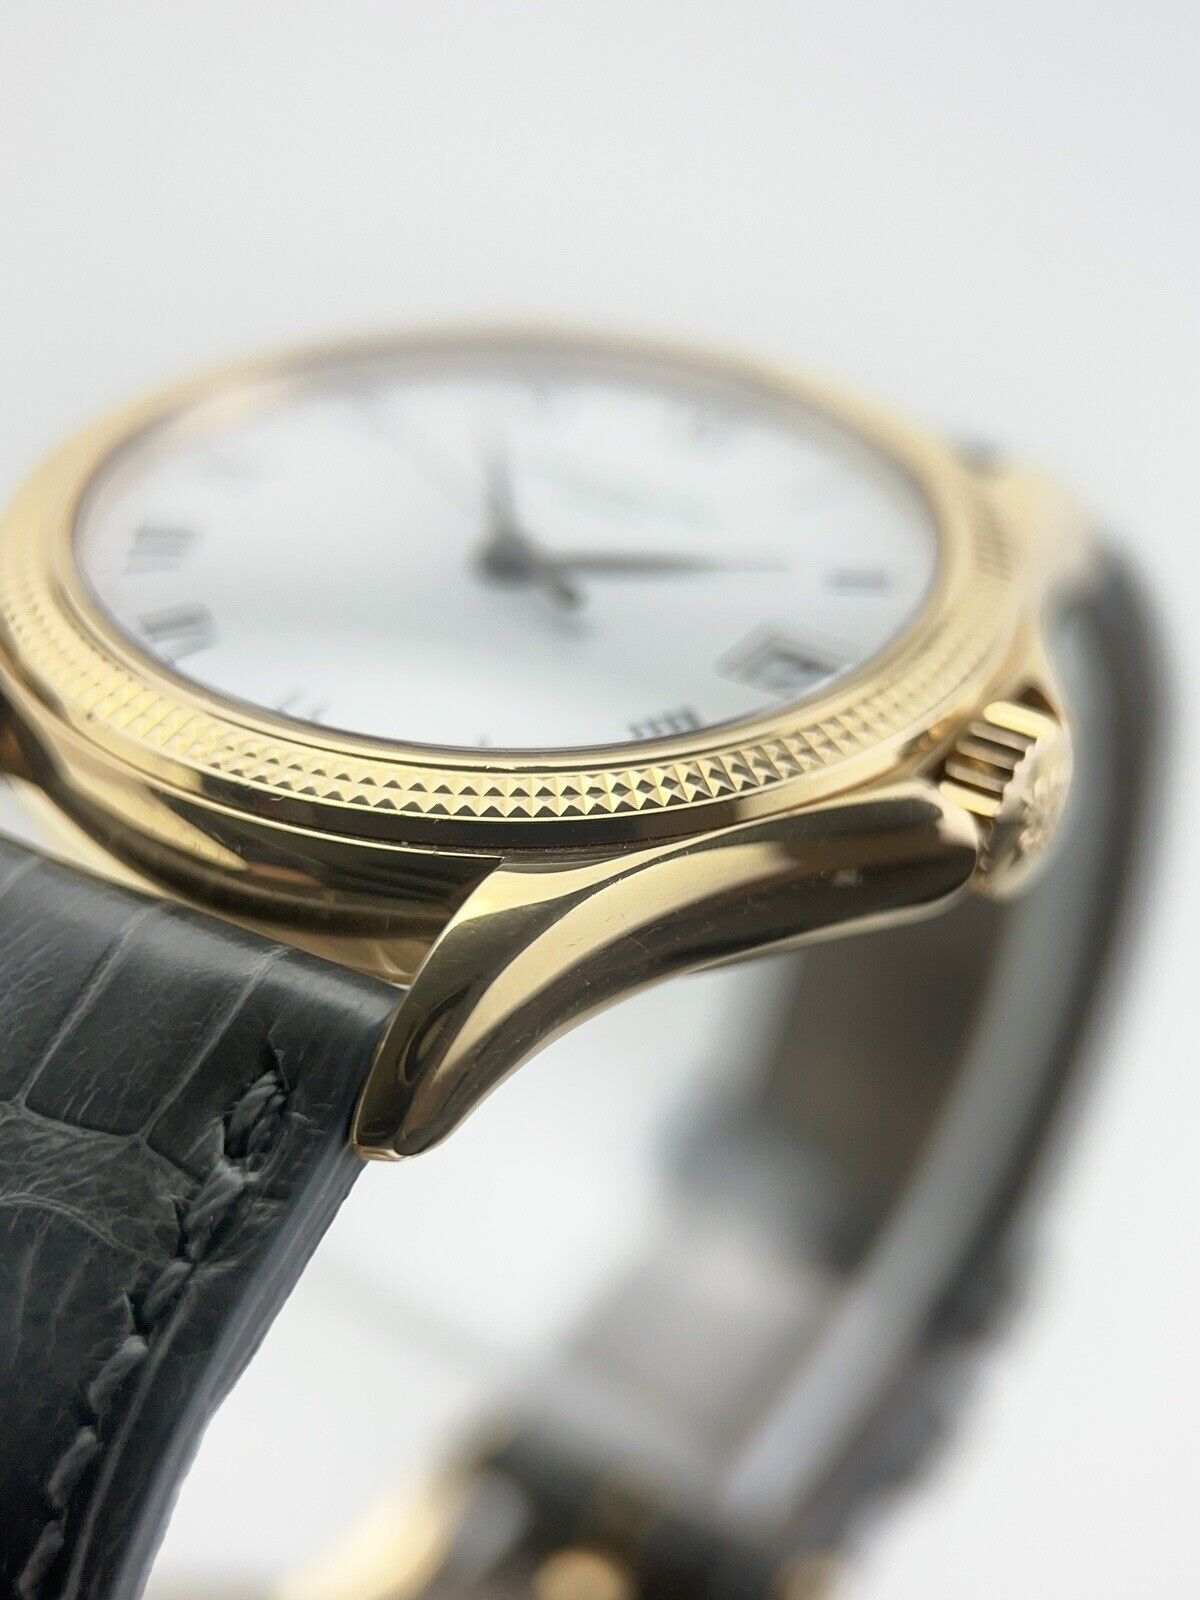 Patek Philippe Calatrava 18k Rose Gold 37mm Automatic Men’s Watch 5117R